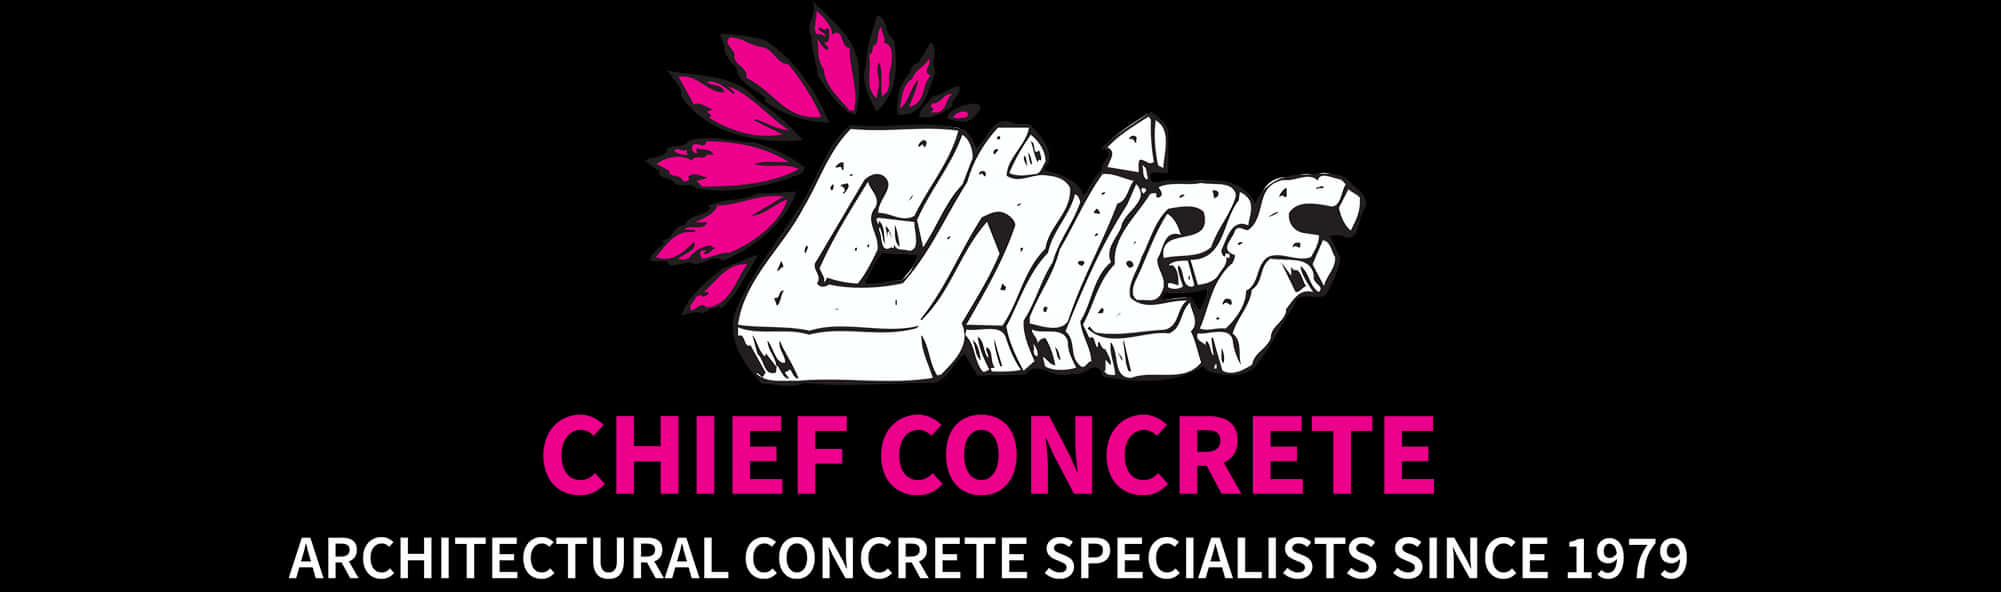 Chief Concrete Company Logo PNG